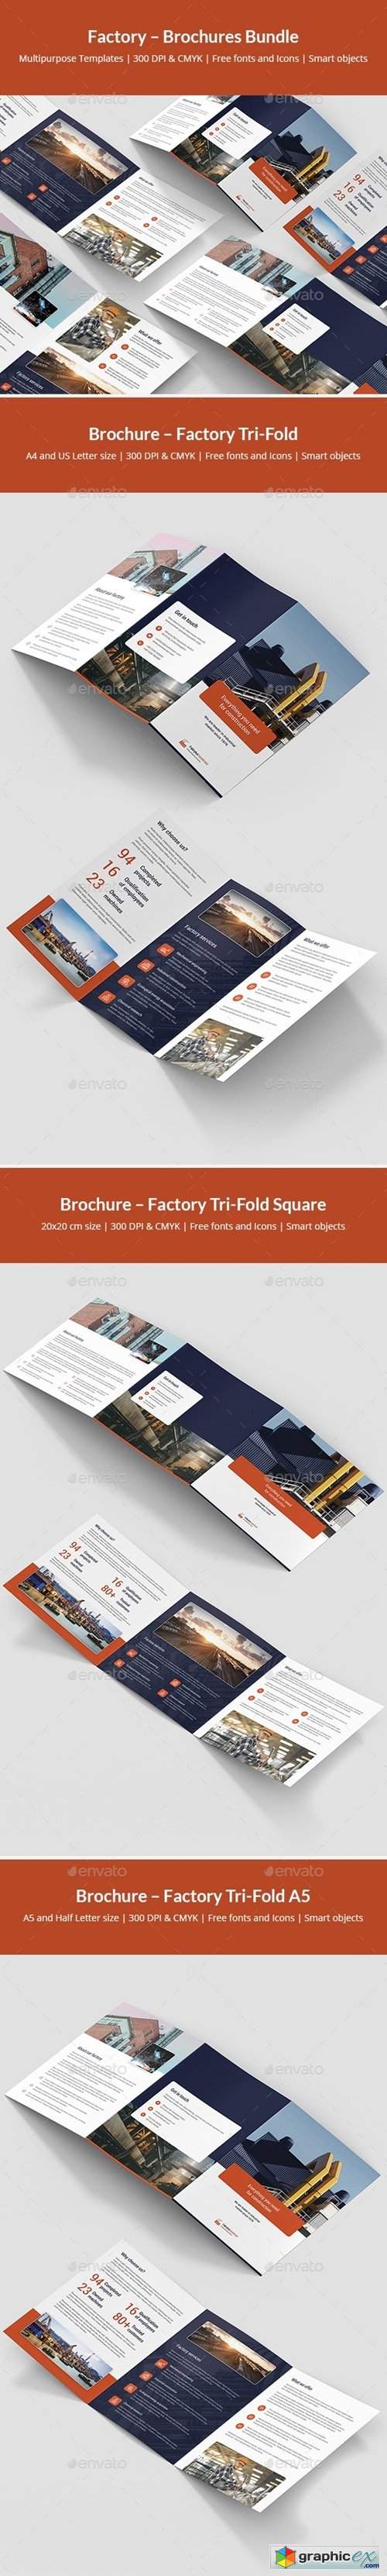 Factory – Brochures Bundle Print Templates 5 in 1